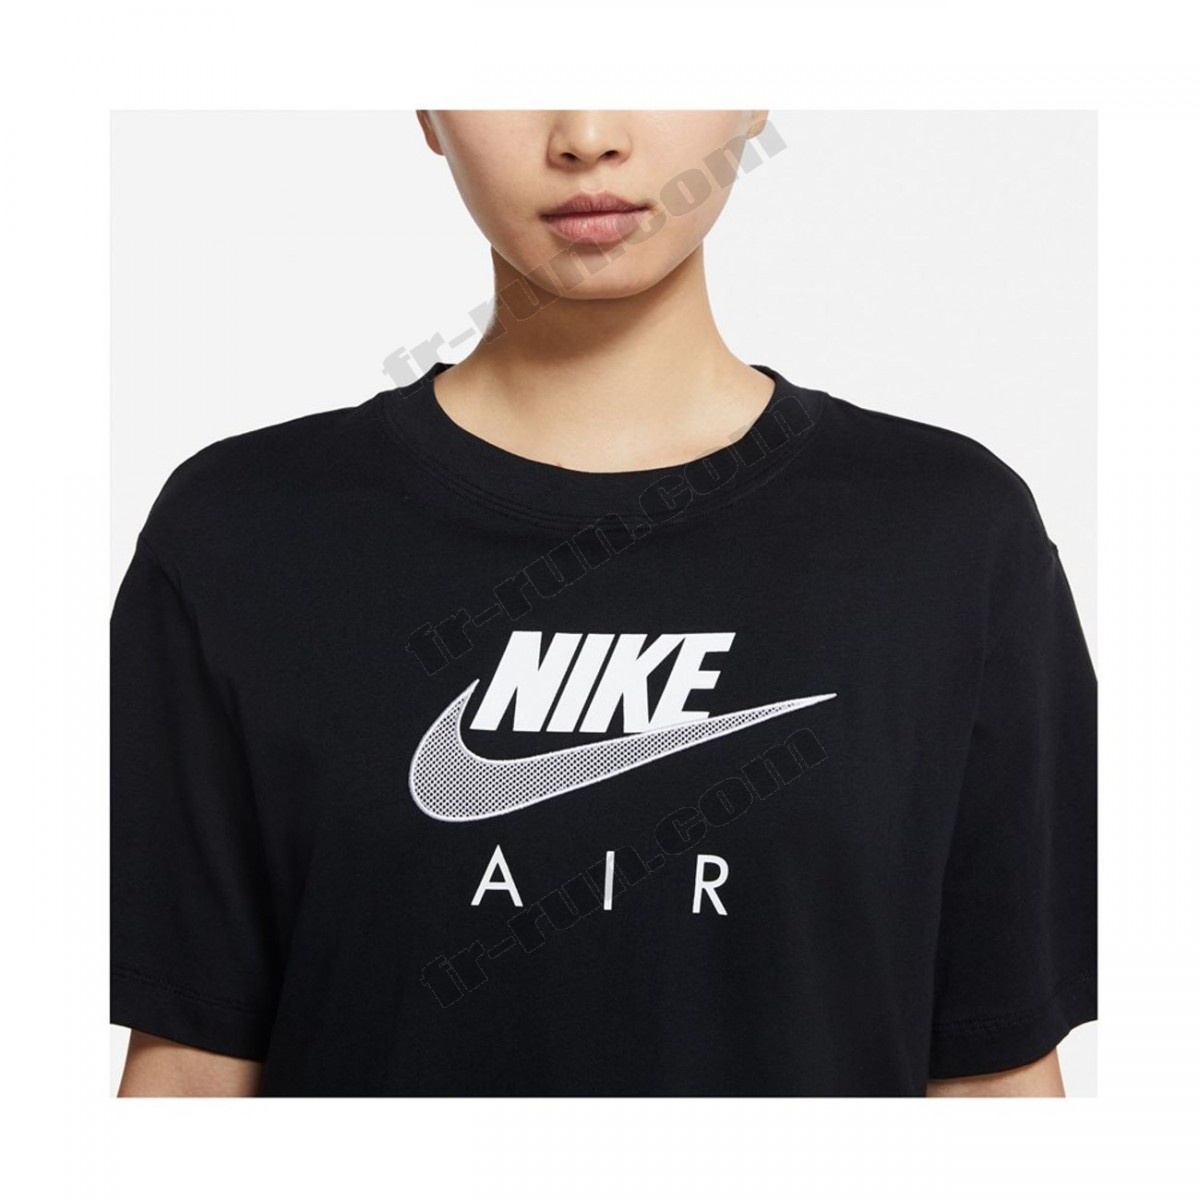 Nike/running homme NIKE Nike Wmns Air ◇◇◇ Pas Cher Du Tout - -3